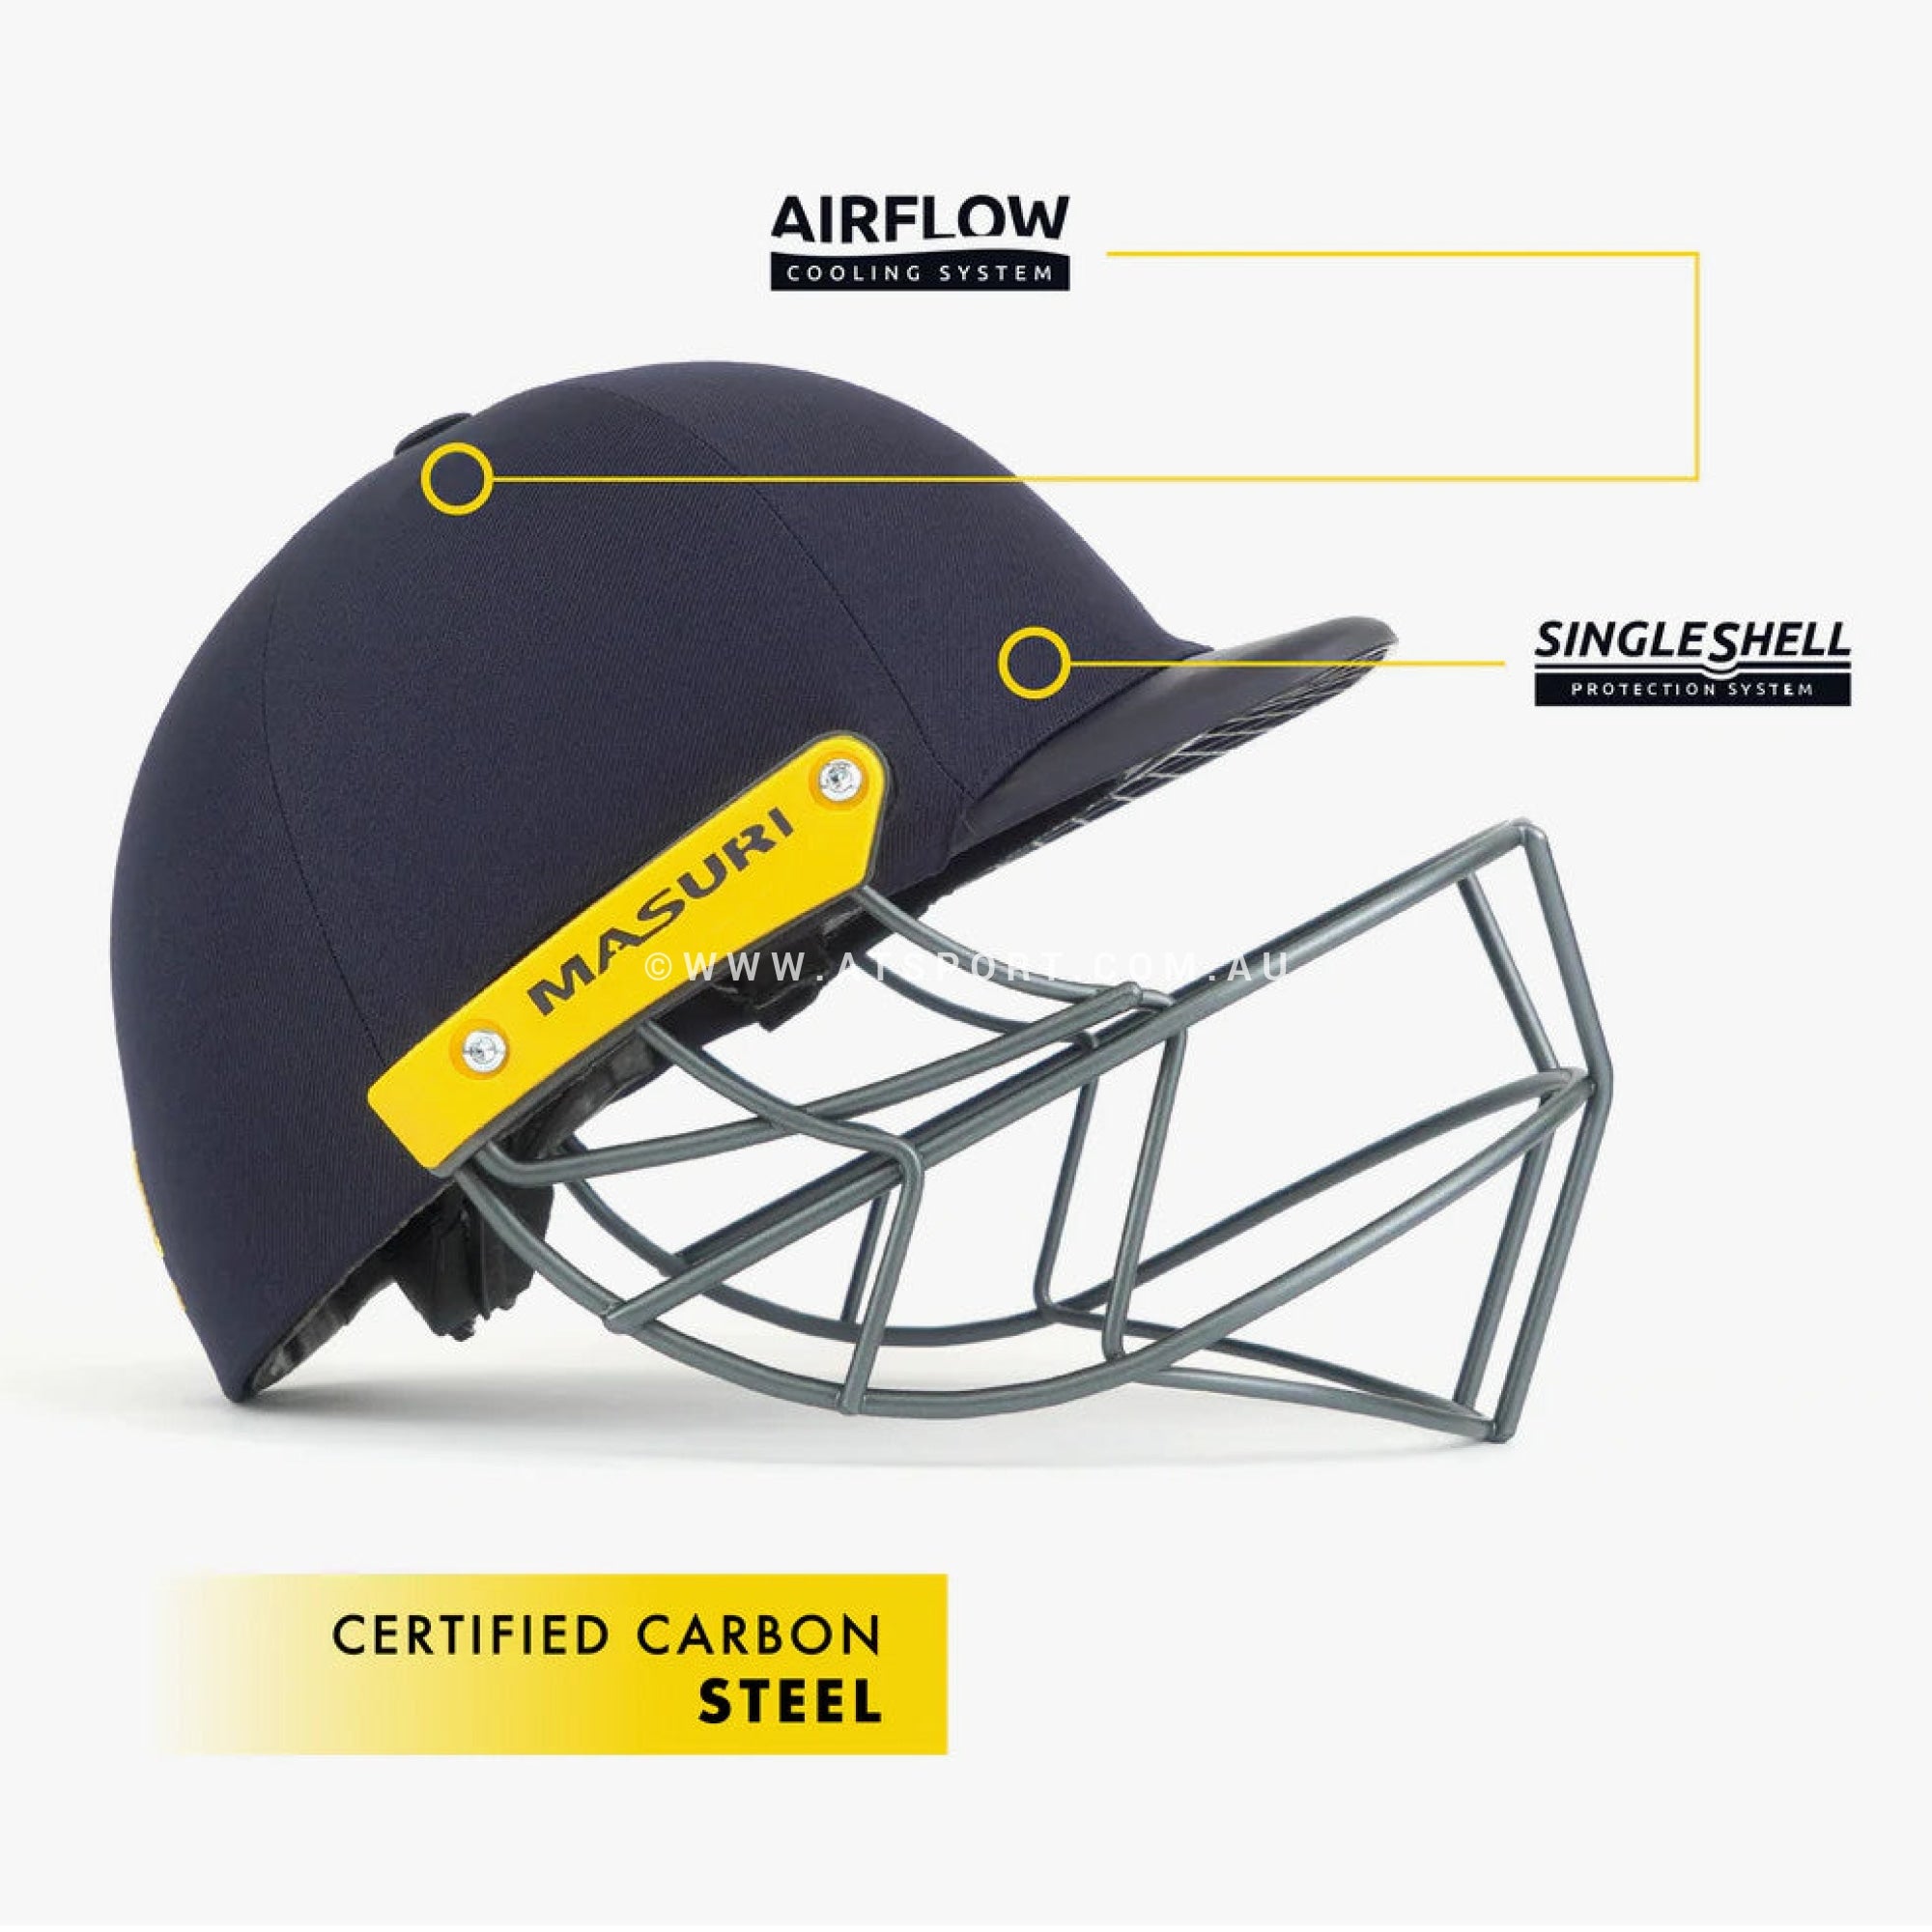 Masuri C LINE Plus Cricket Helmet - CUSTOM LOGO - AT Sports